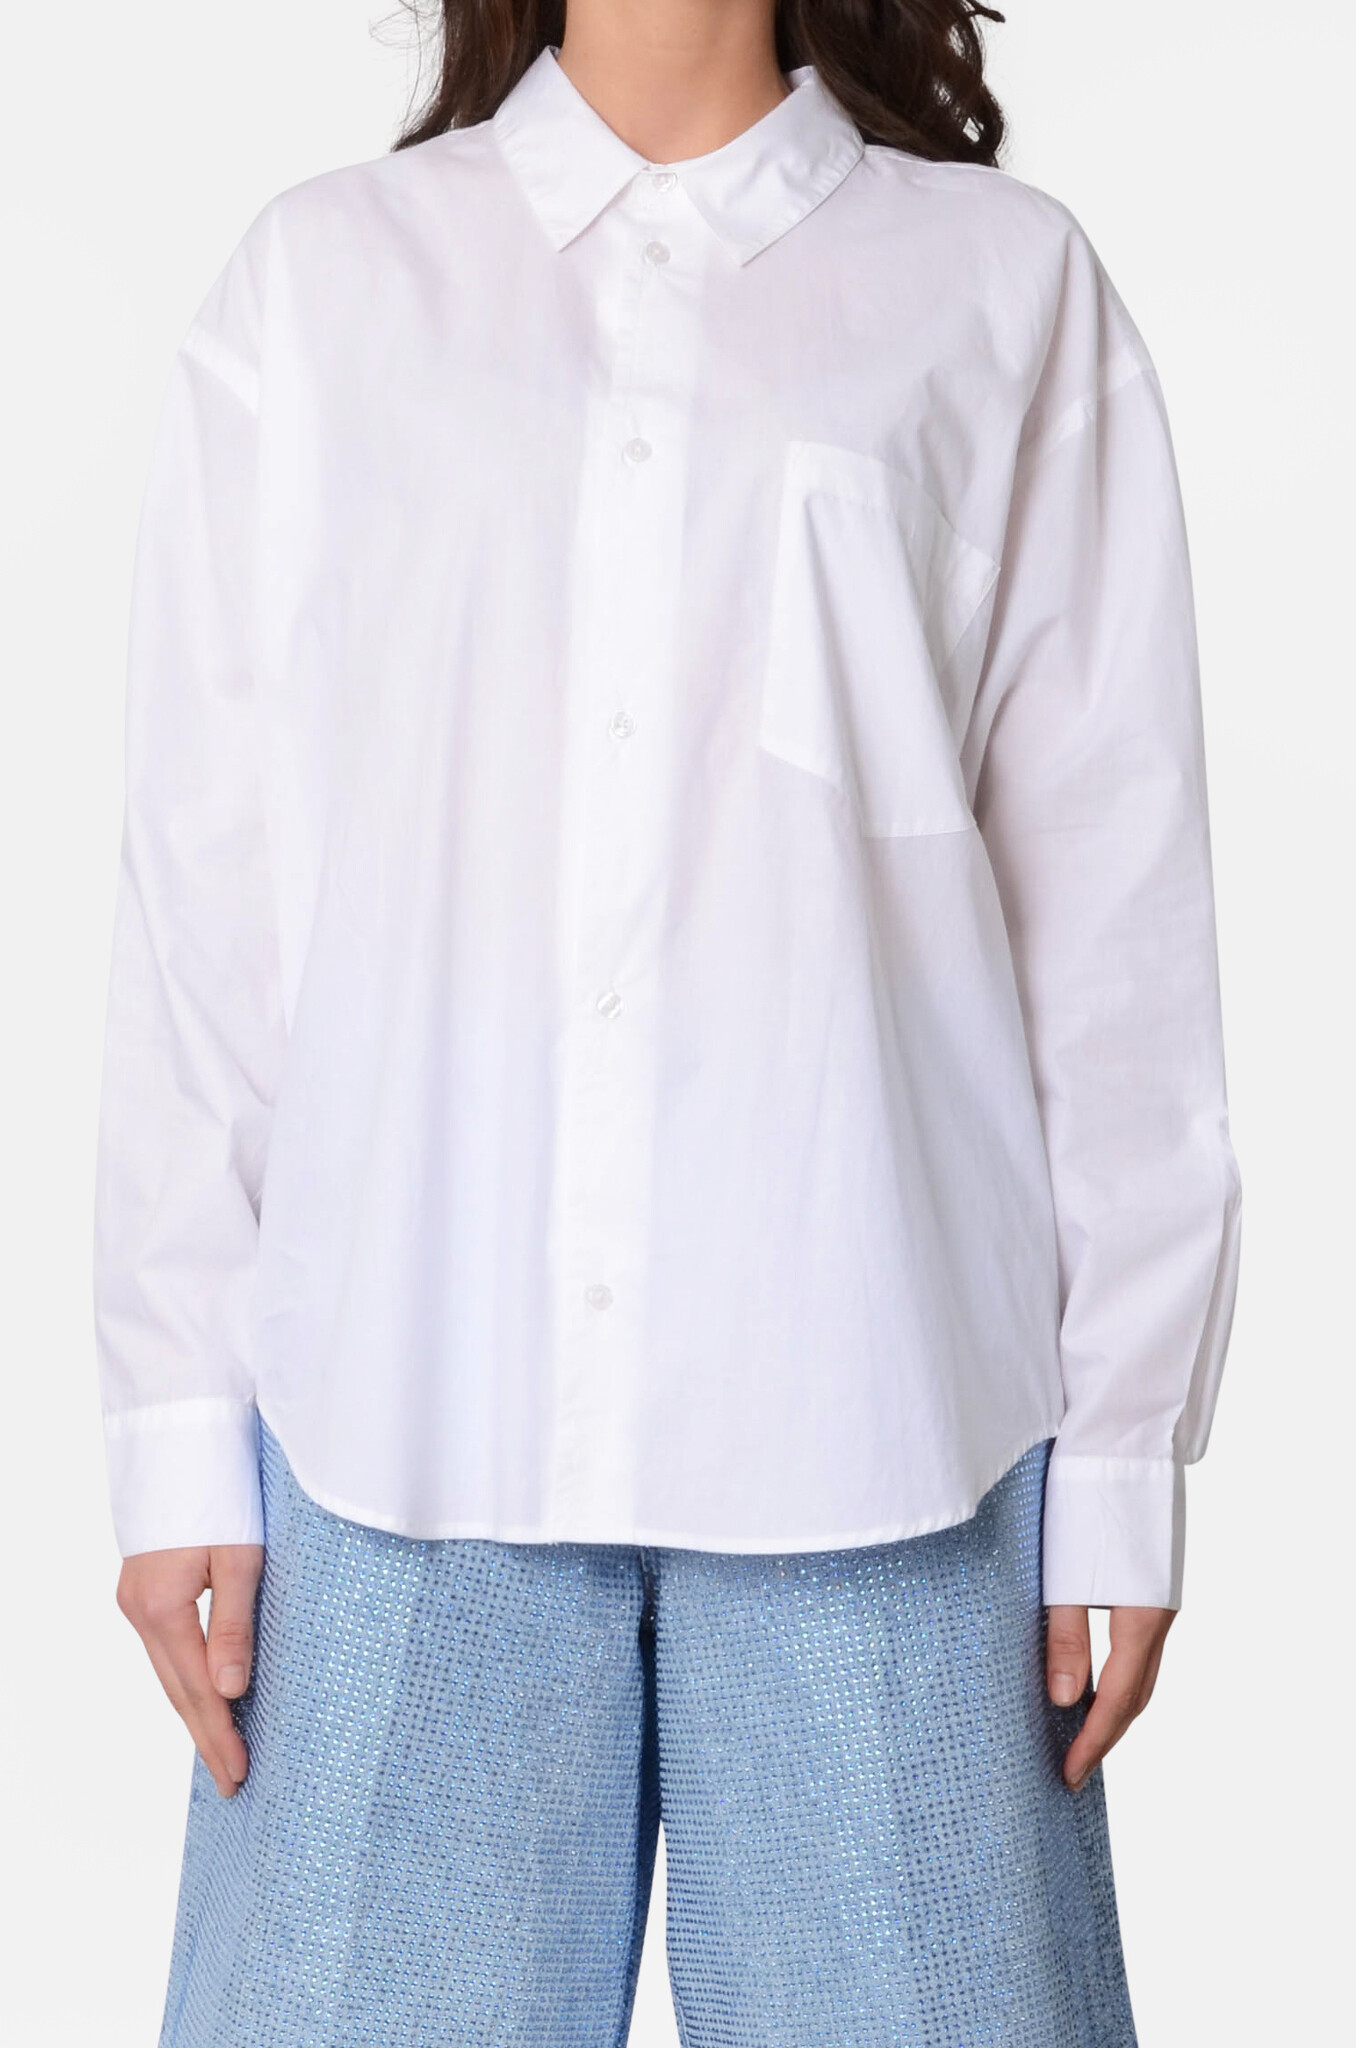 Diaz Shirt in White-1